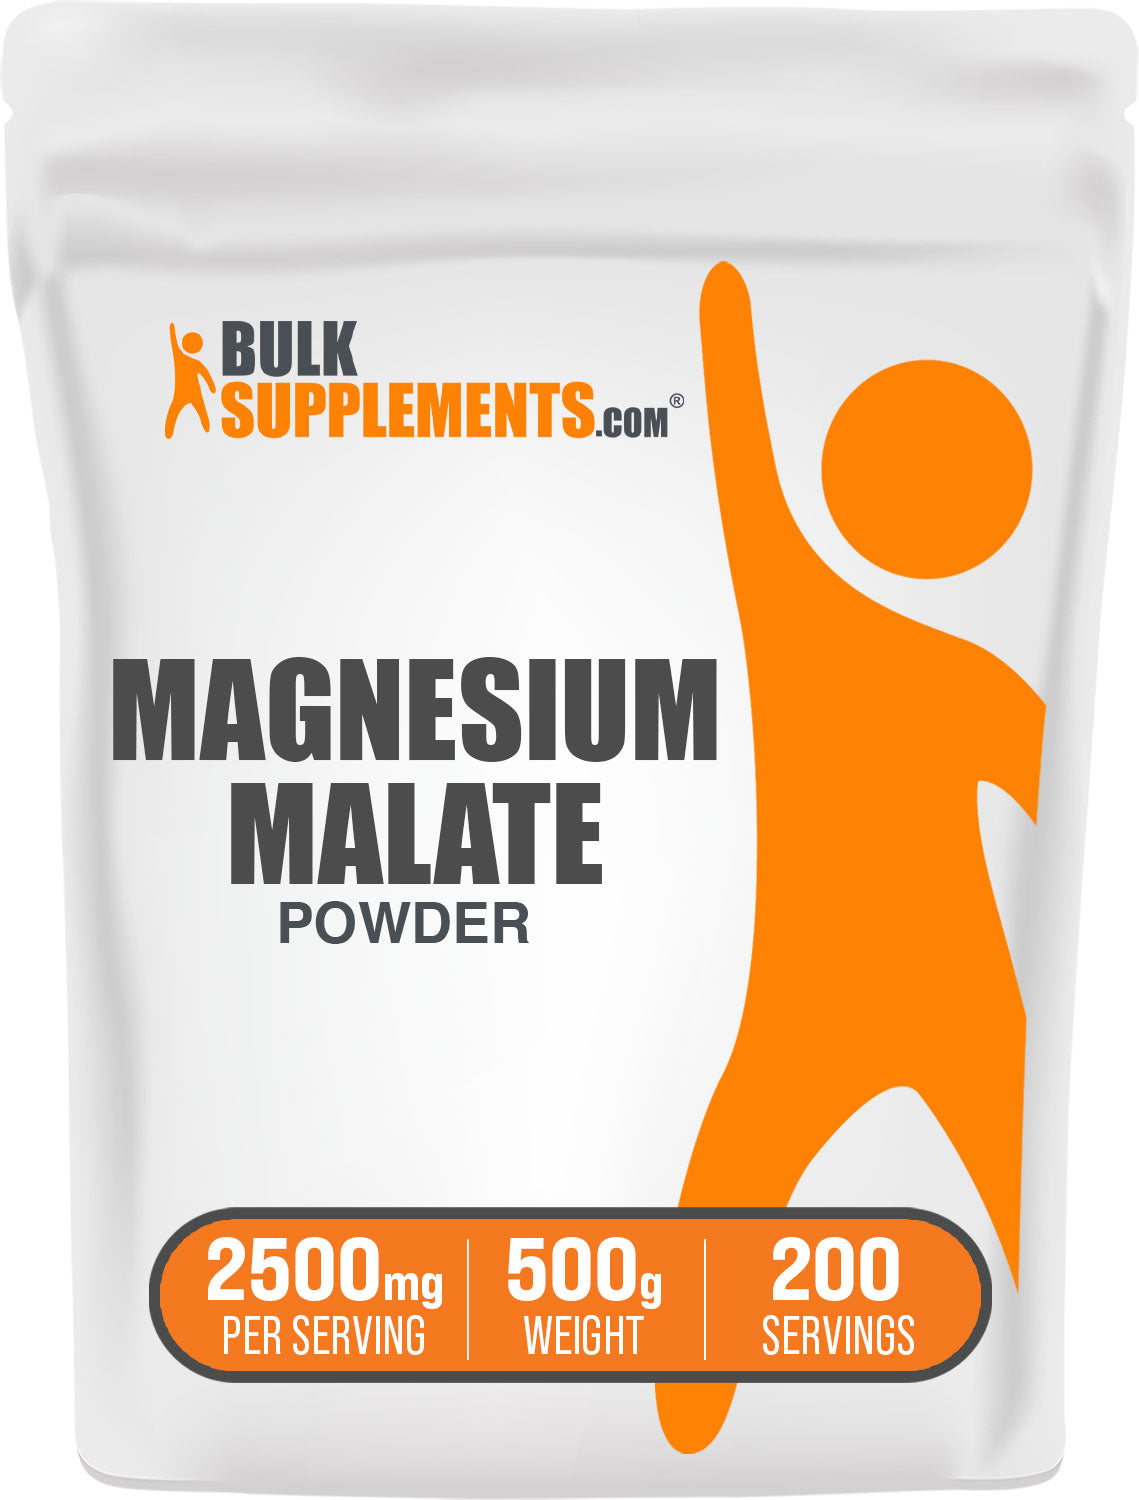 Magnesium Malate Powder, 500g Bag, 2500mg per serving and 200 servings